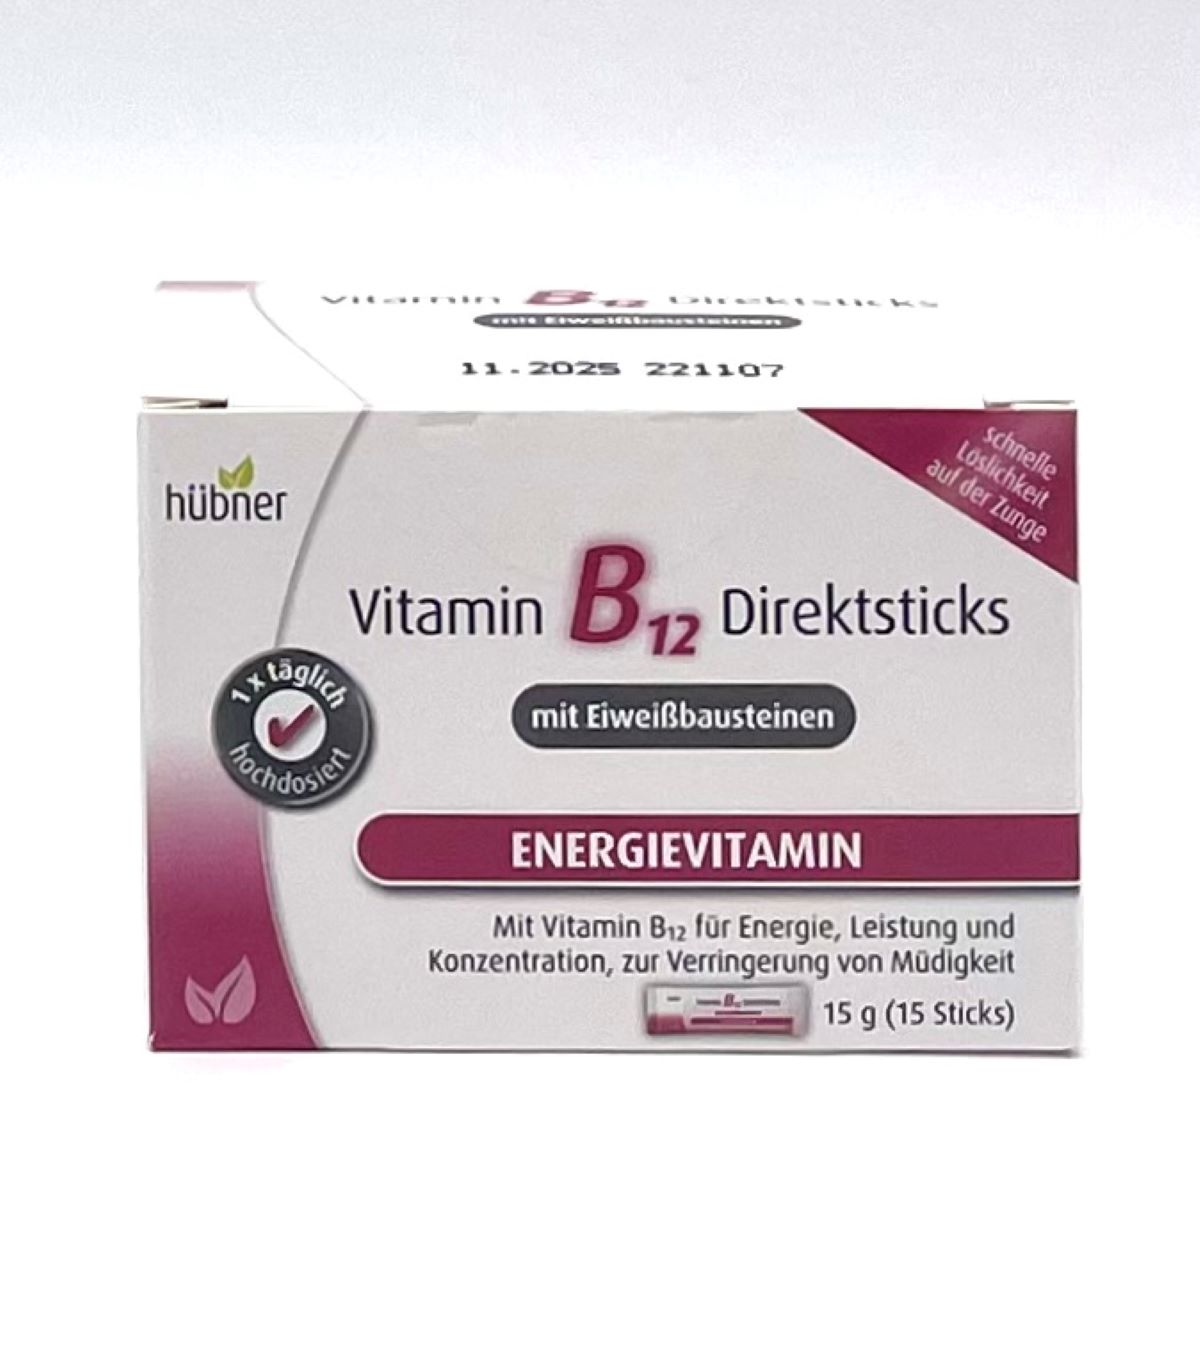 Hübner Vitamin B12 Direktsticks